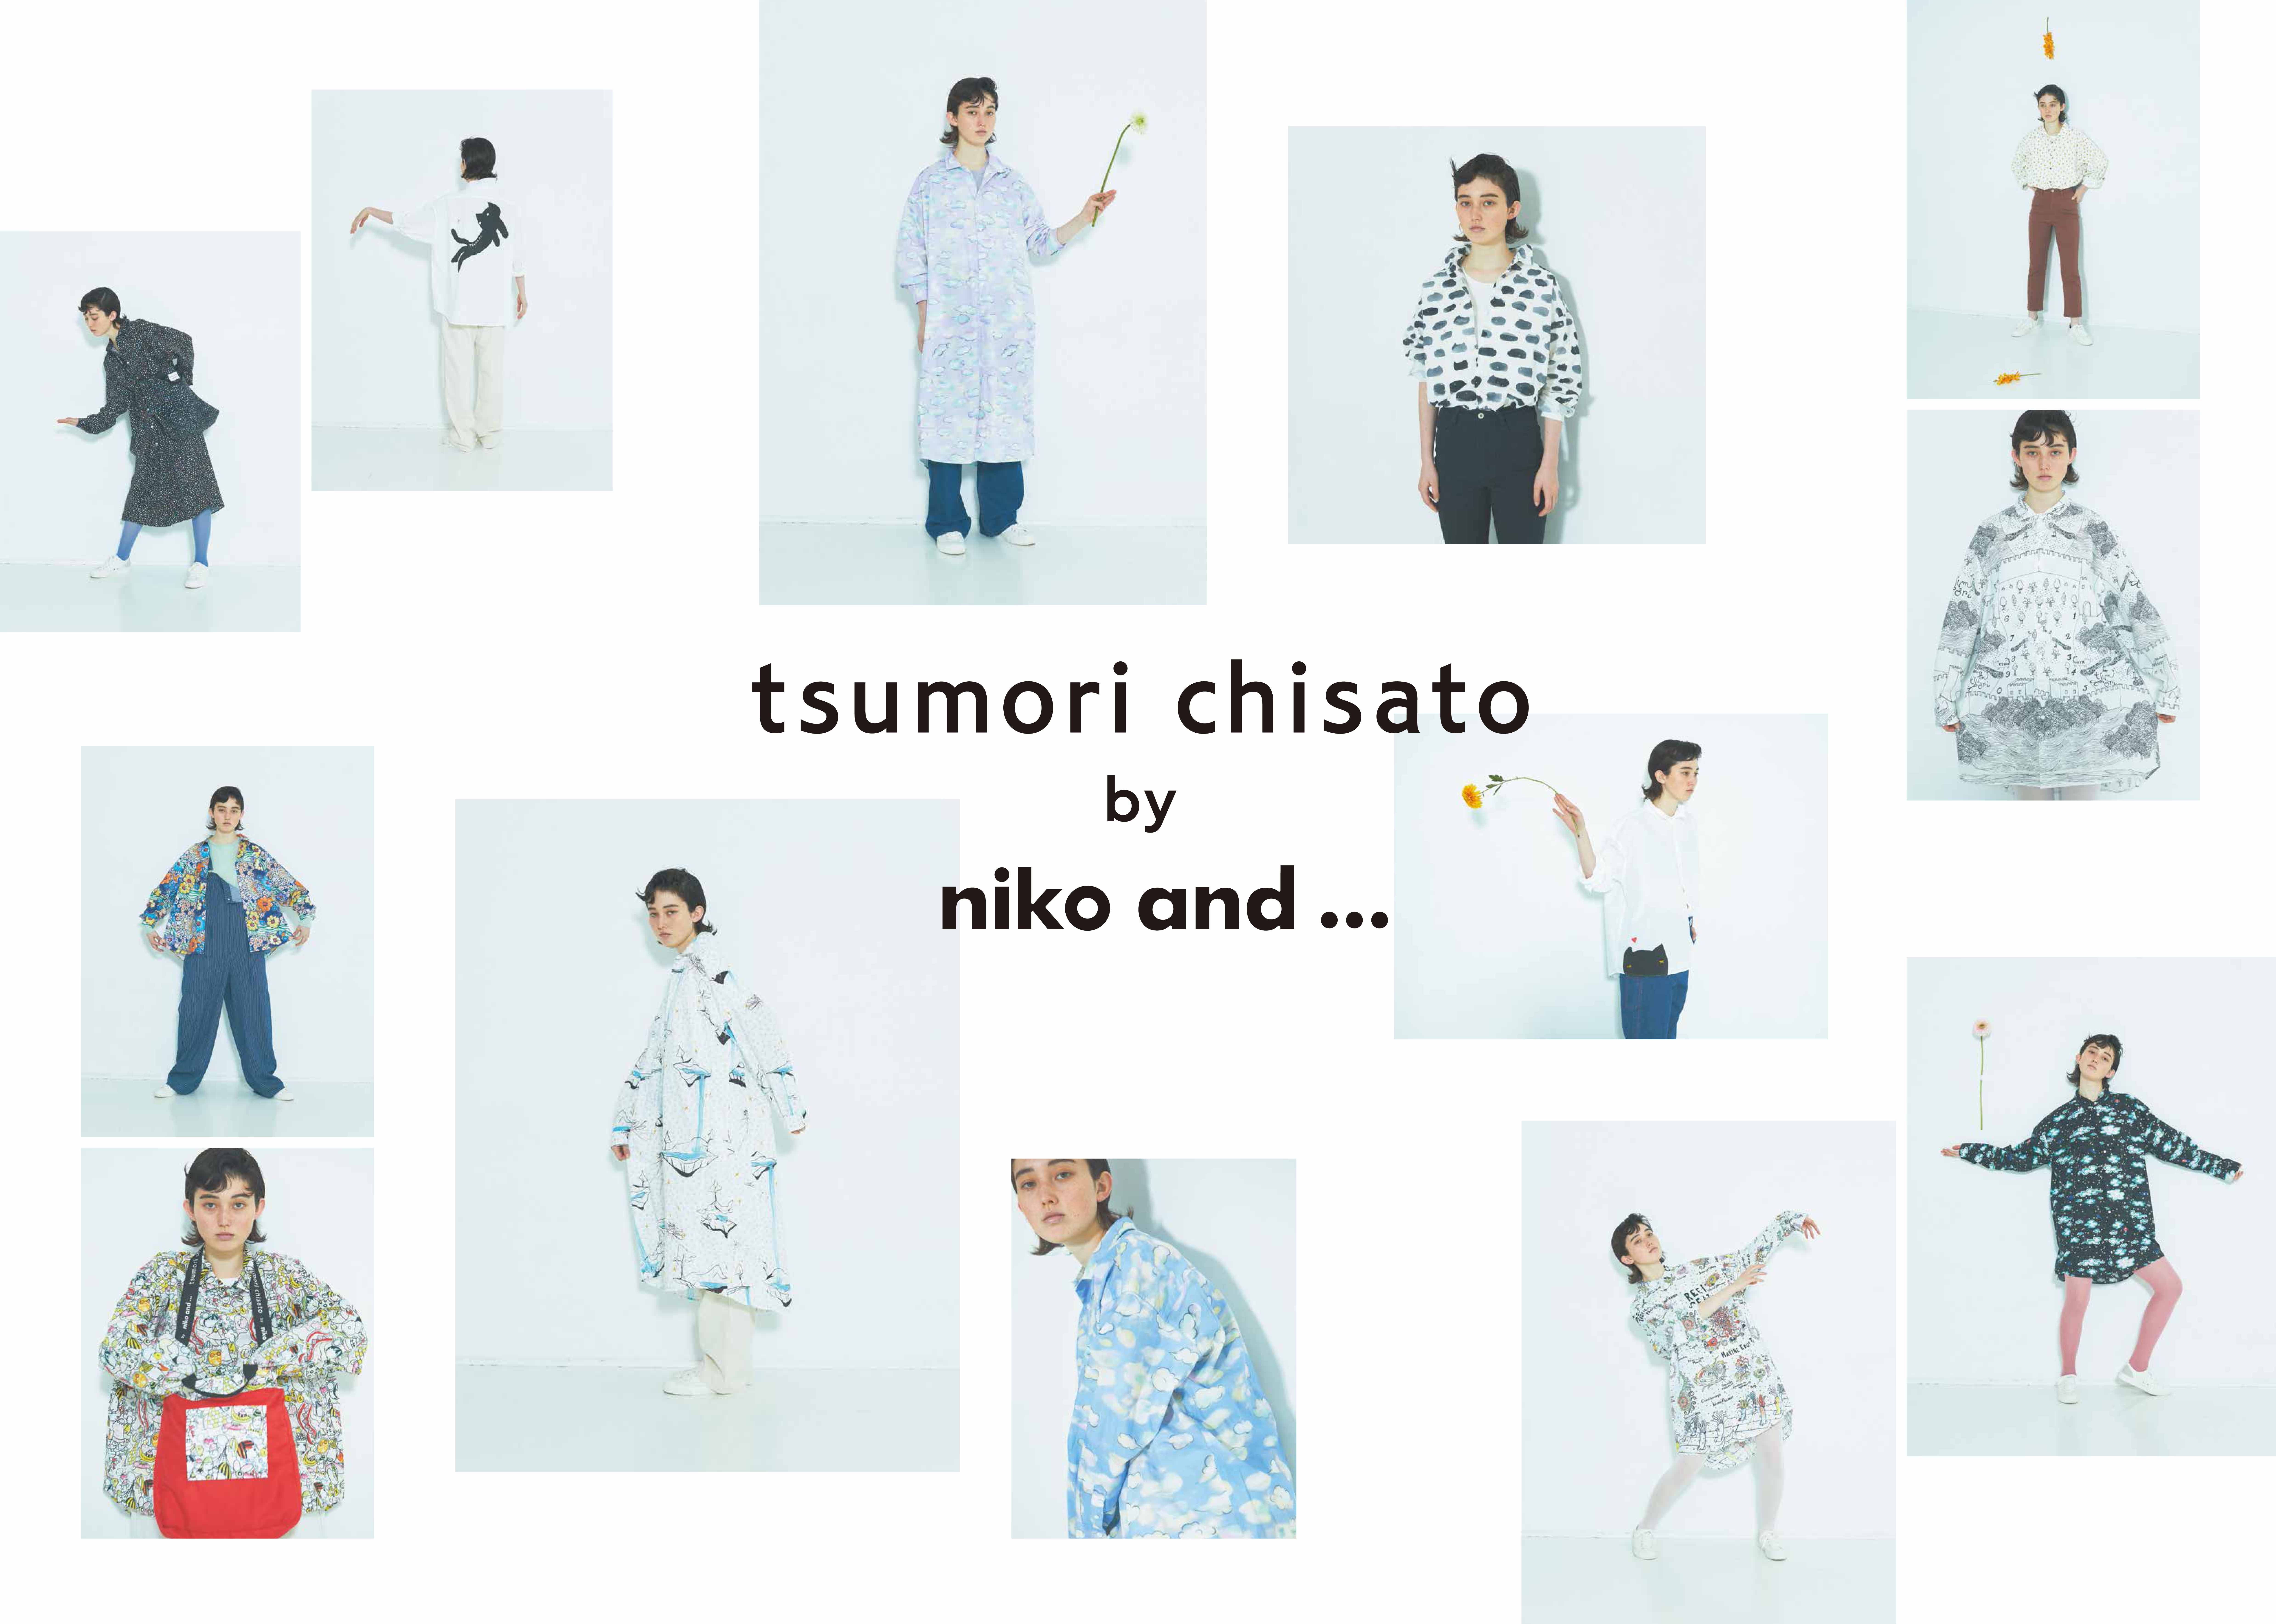 Niko And Tsumori Chisatoコラボレーションアイテムが1月31日 金 店頭販売開始 株式会社アダストリアのプレスリリース